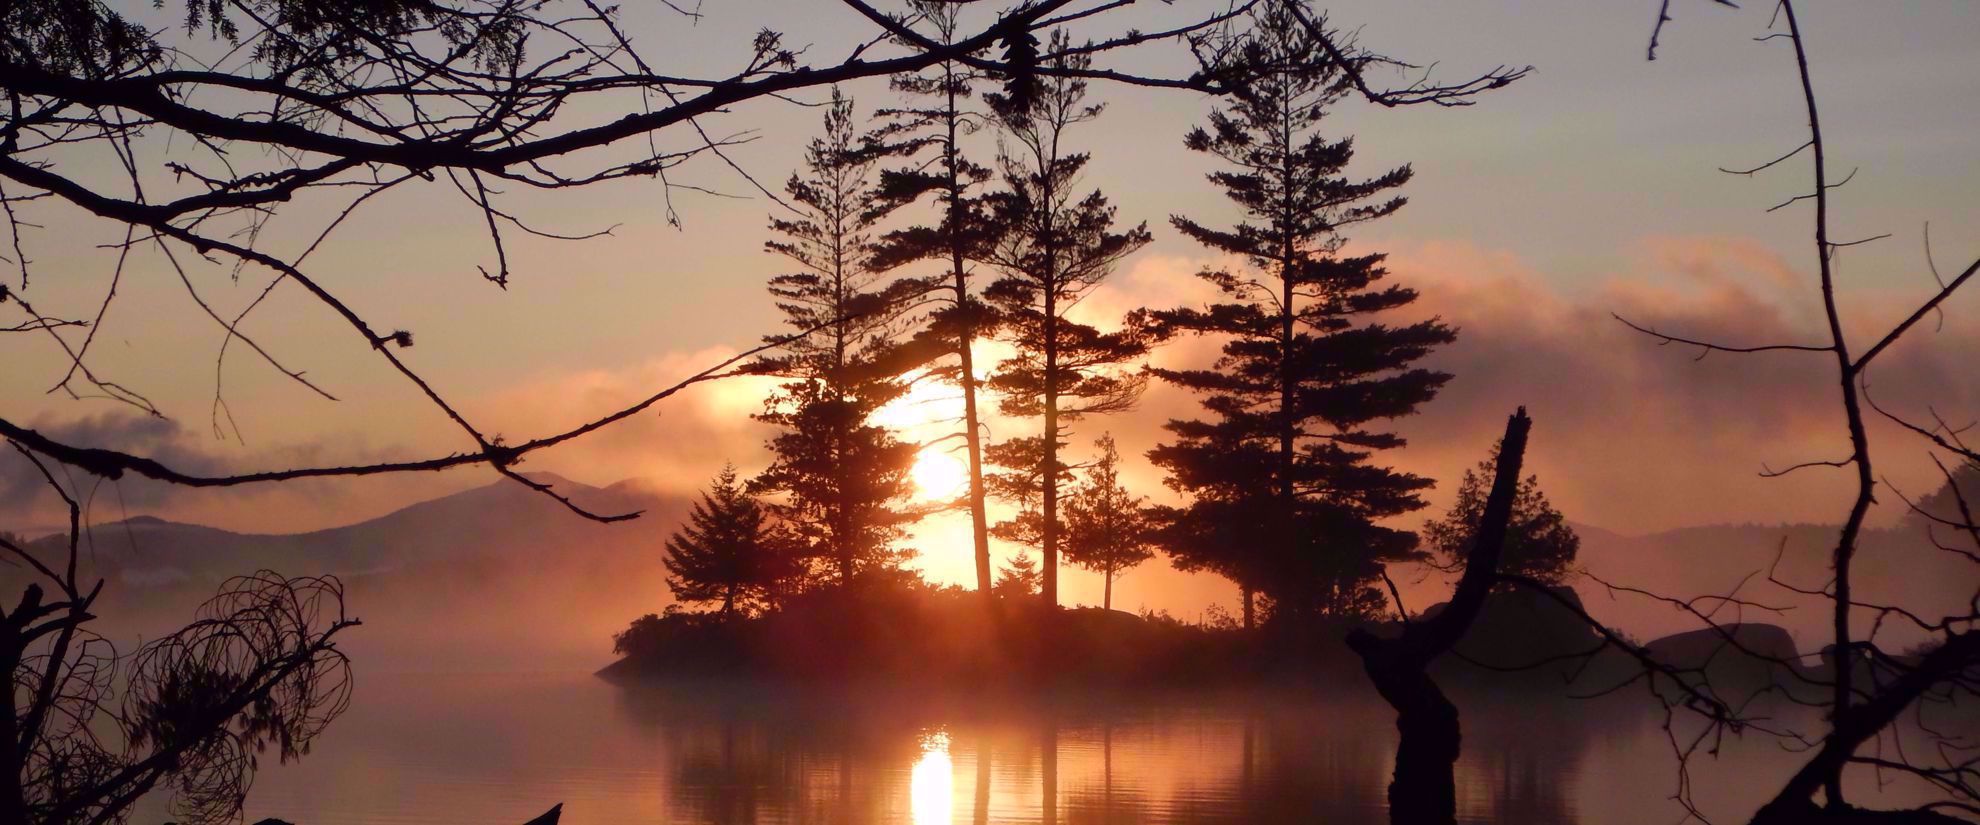 sunset through trees over lake